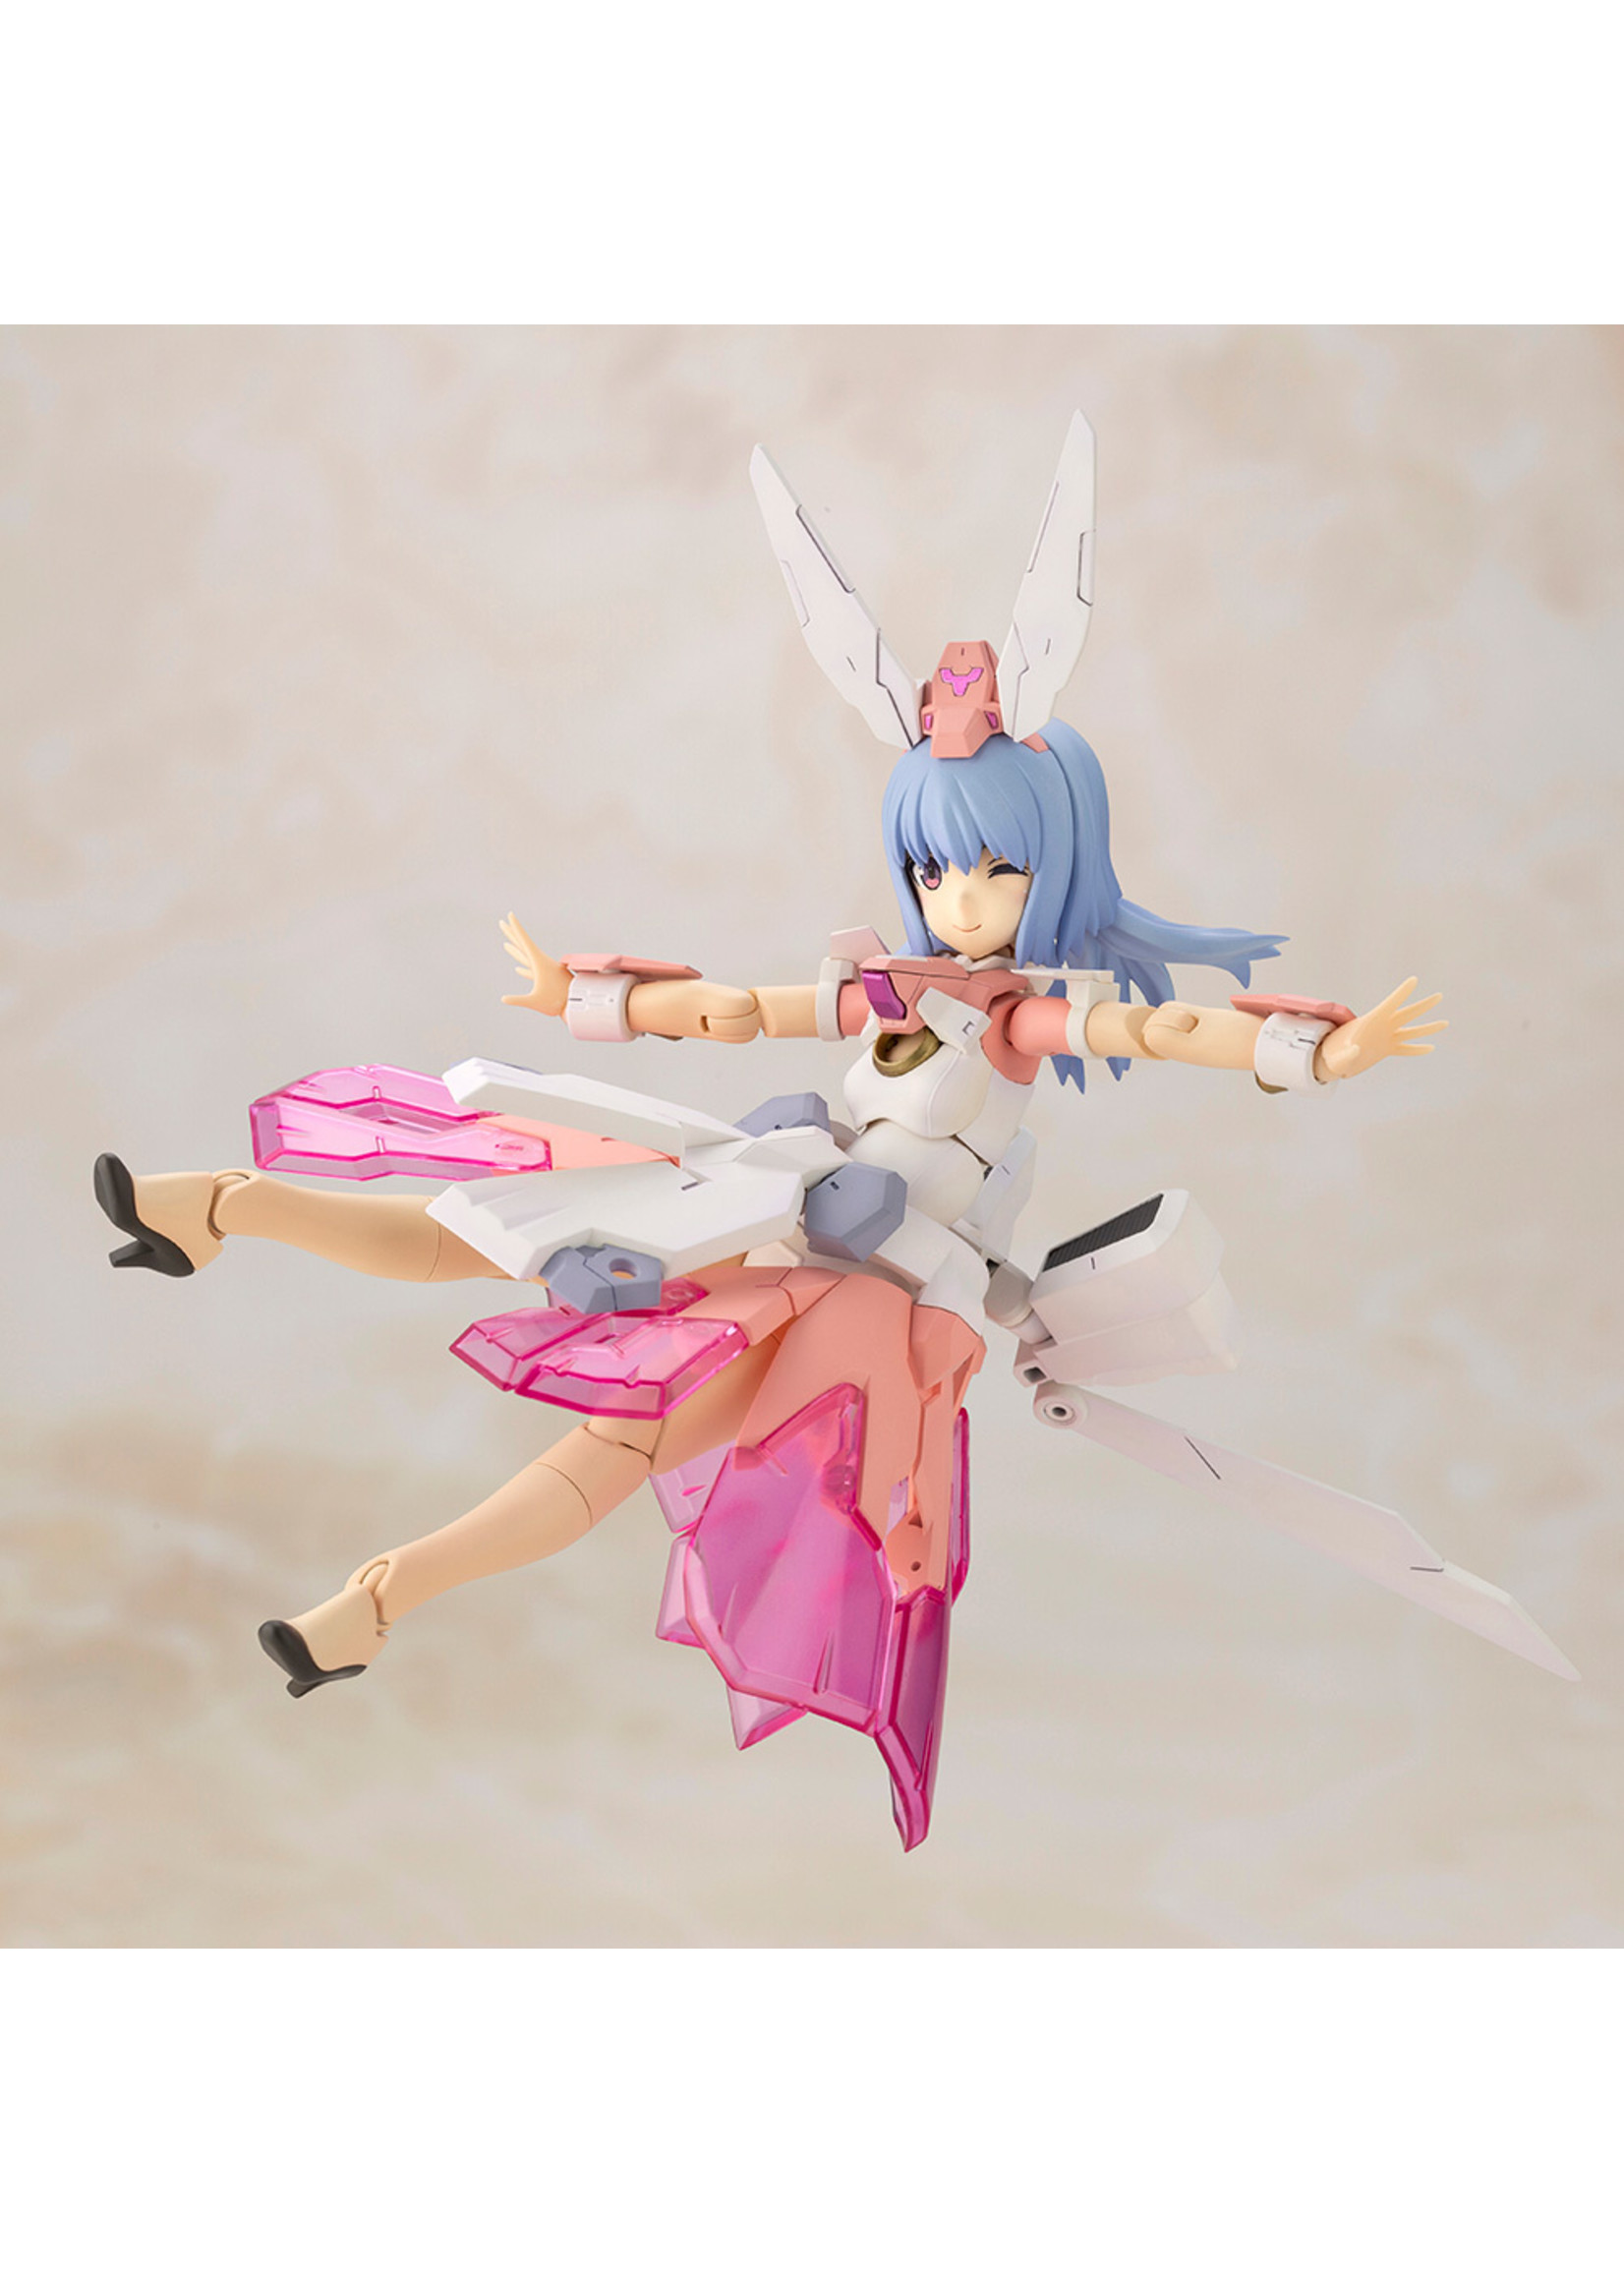 Kotobukiya FG104 - "Frame Arms Girl" Megami Device Magical Baselard